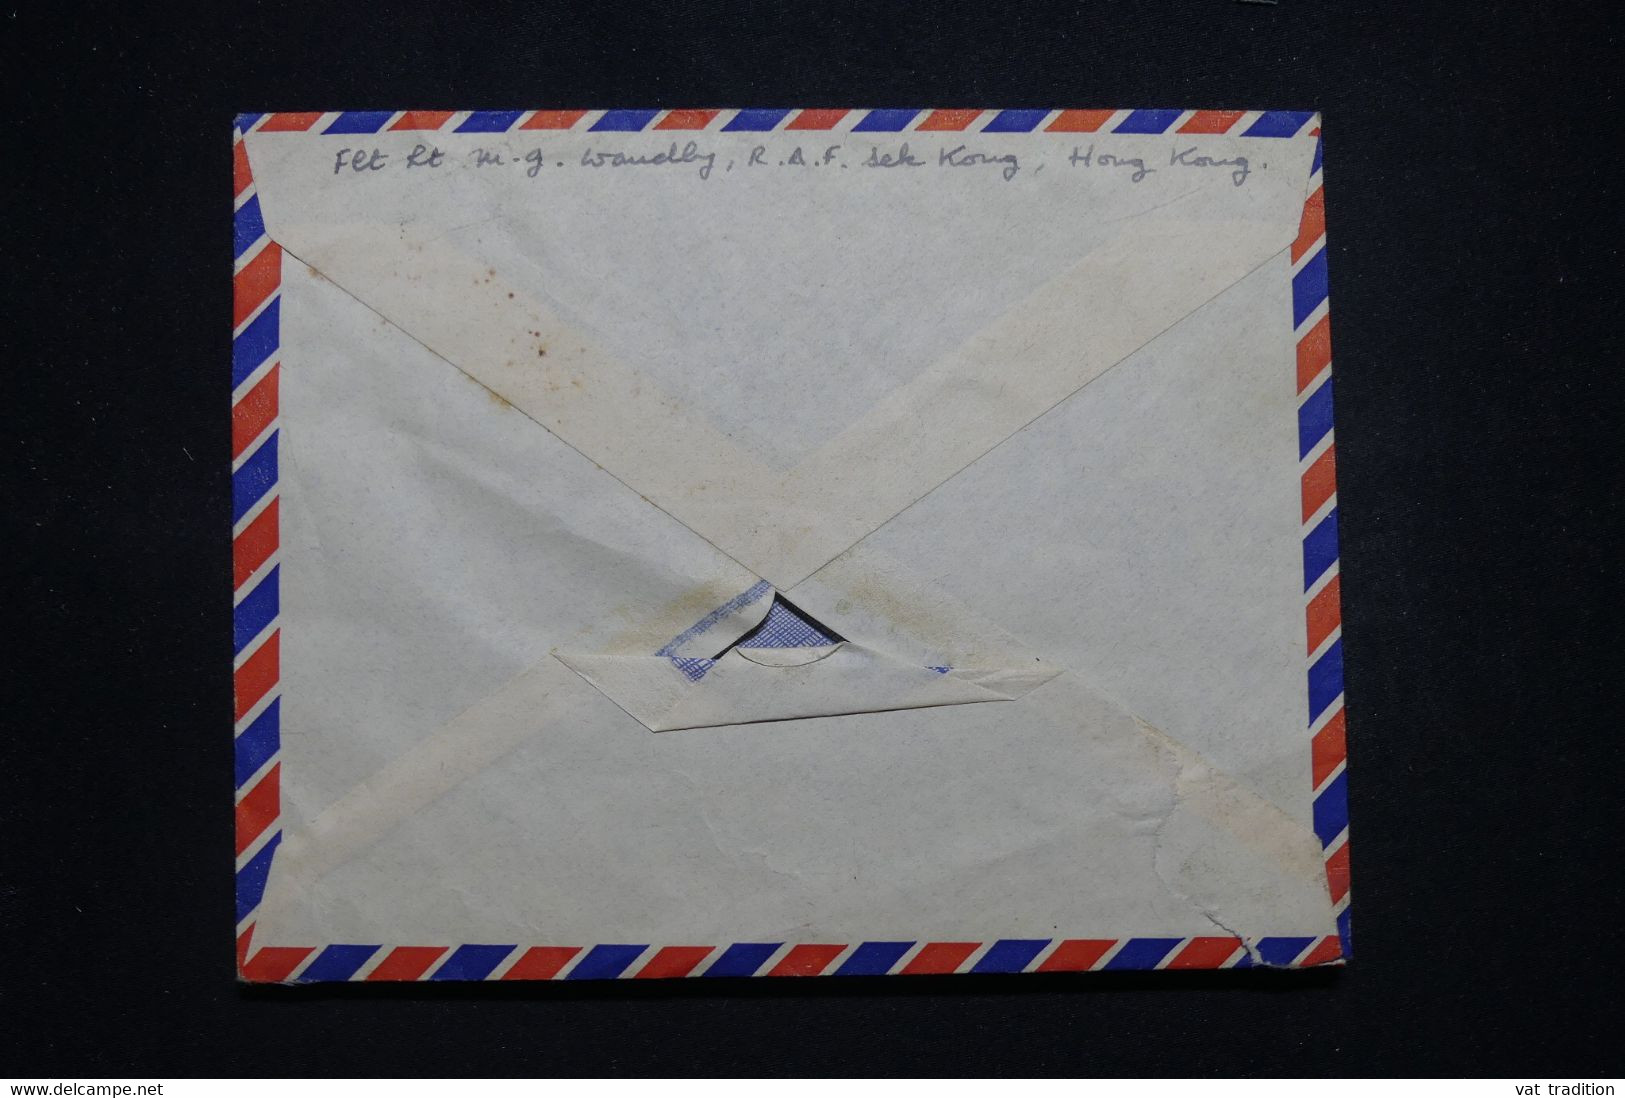 HONG KONG - Enveloppe De Kowloon Pour La France En 1953 - L 99667 - Cartas & Documentos